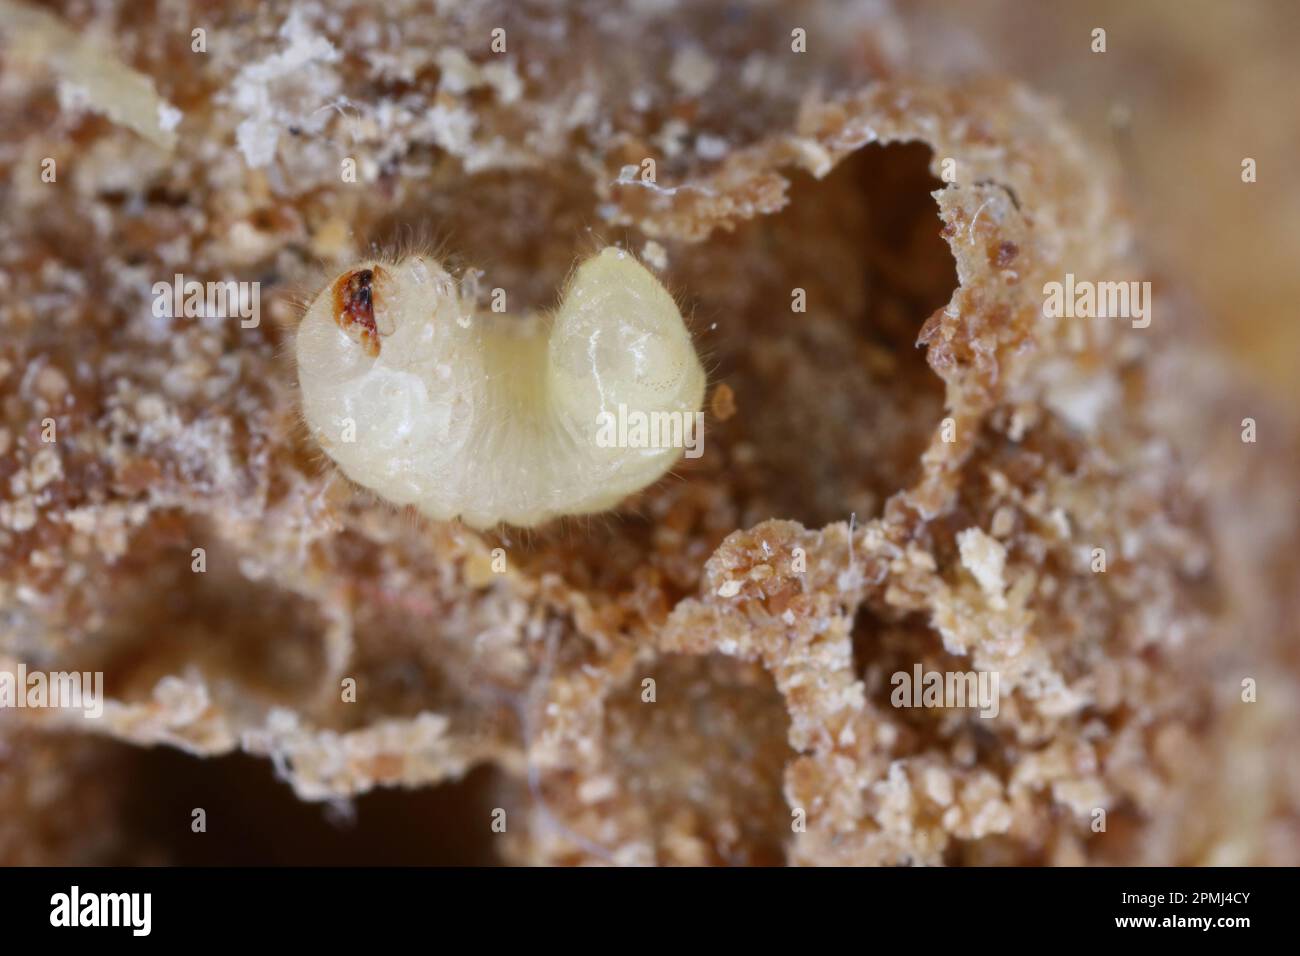 Biscuit, drugstore or bread beetle (Stegobium paniceum) larva stored product pest. Stock Photo